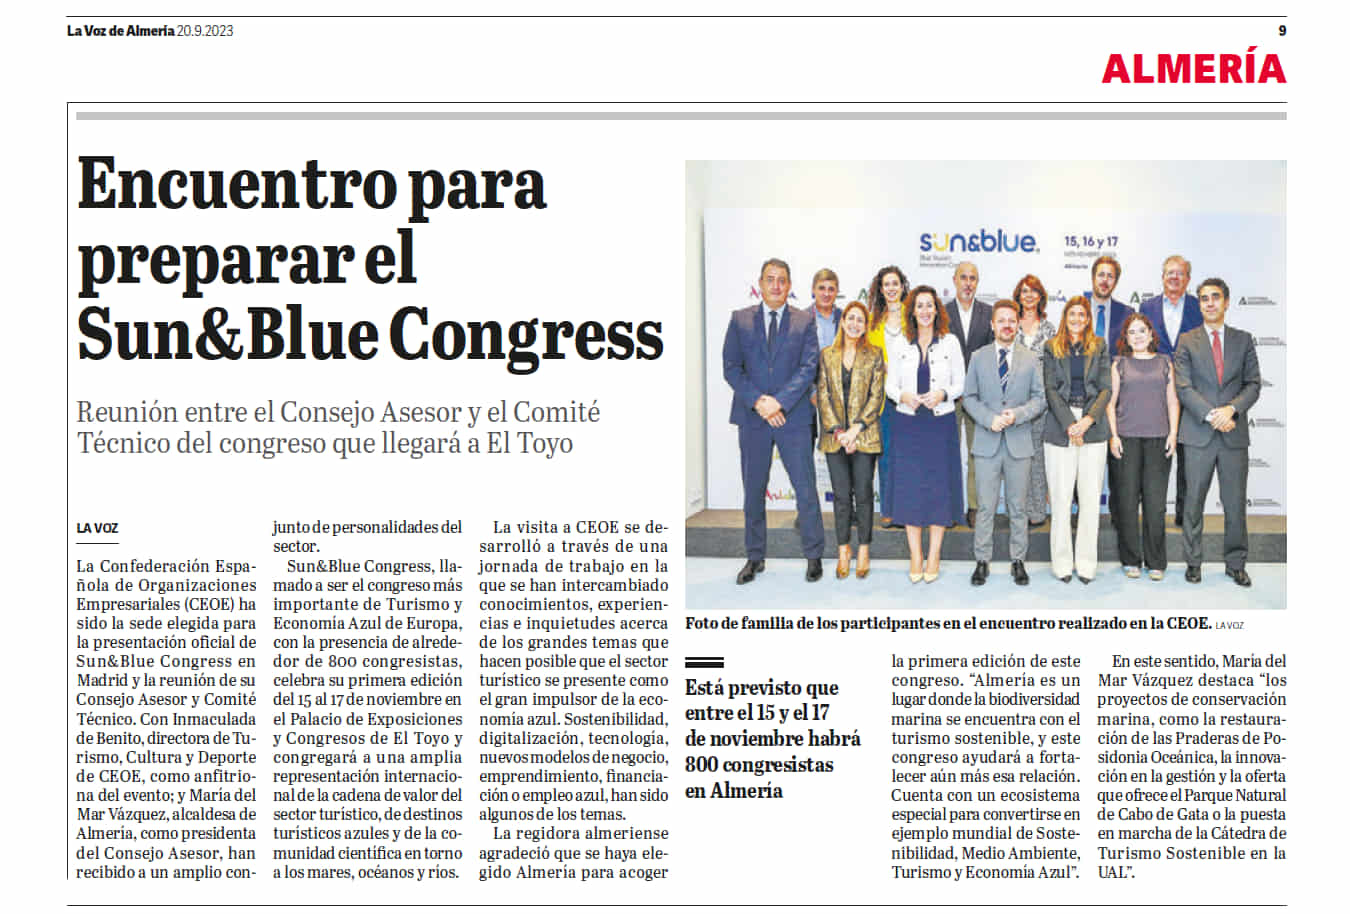 screenshot news article dated 20 september 2023 in la voz de almeria on Sun&Blue Congress 202